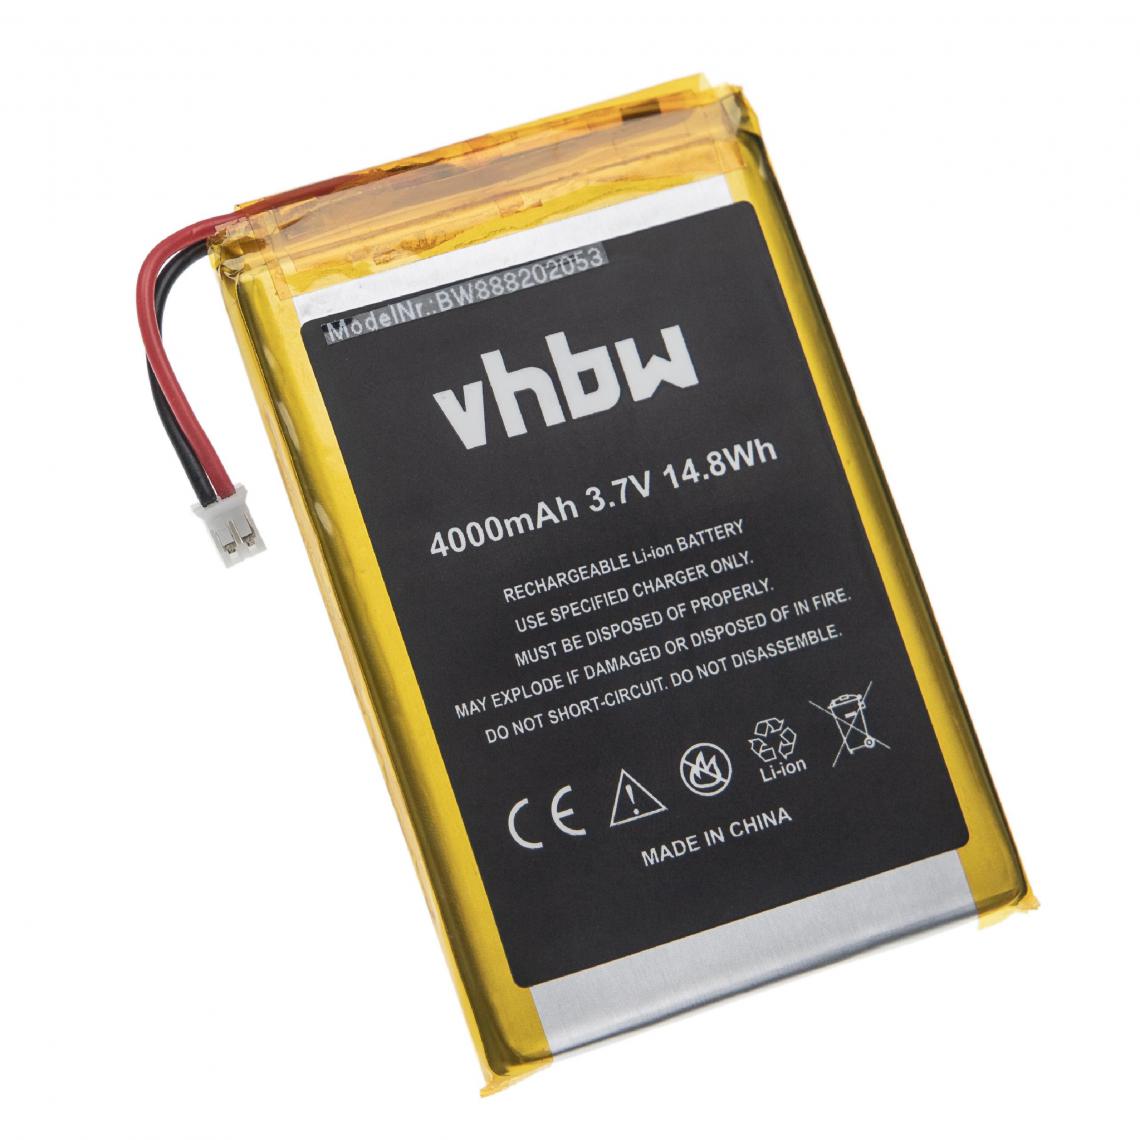 Vhbw - vhbw batterie compatible avec Technaxx TX59, TX-59+ interphone, caméra d'interphone (4000mAh, 3,7V, Li-ion) - Autre appareil de mesure